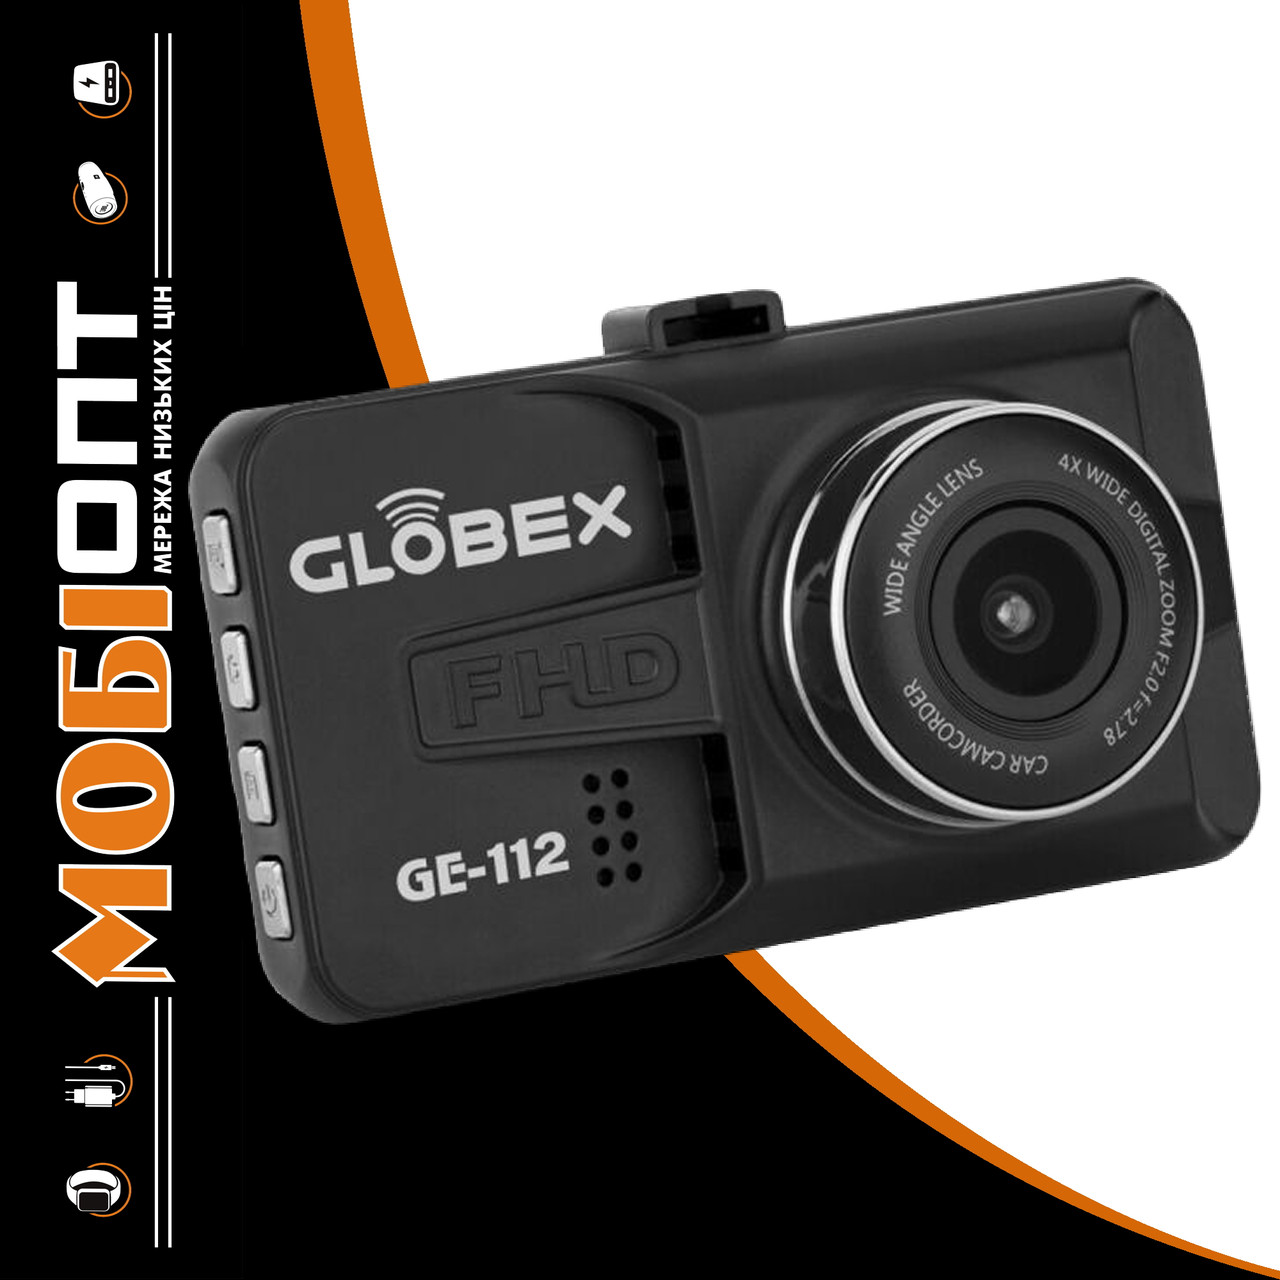 Відеореєстратор Globex GE-112 UA UCRF